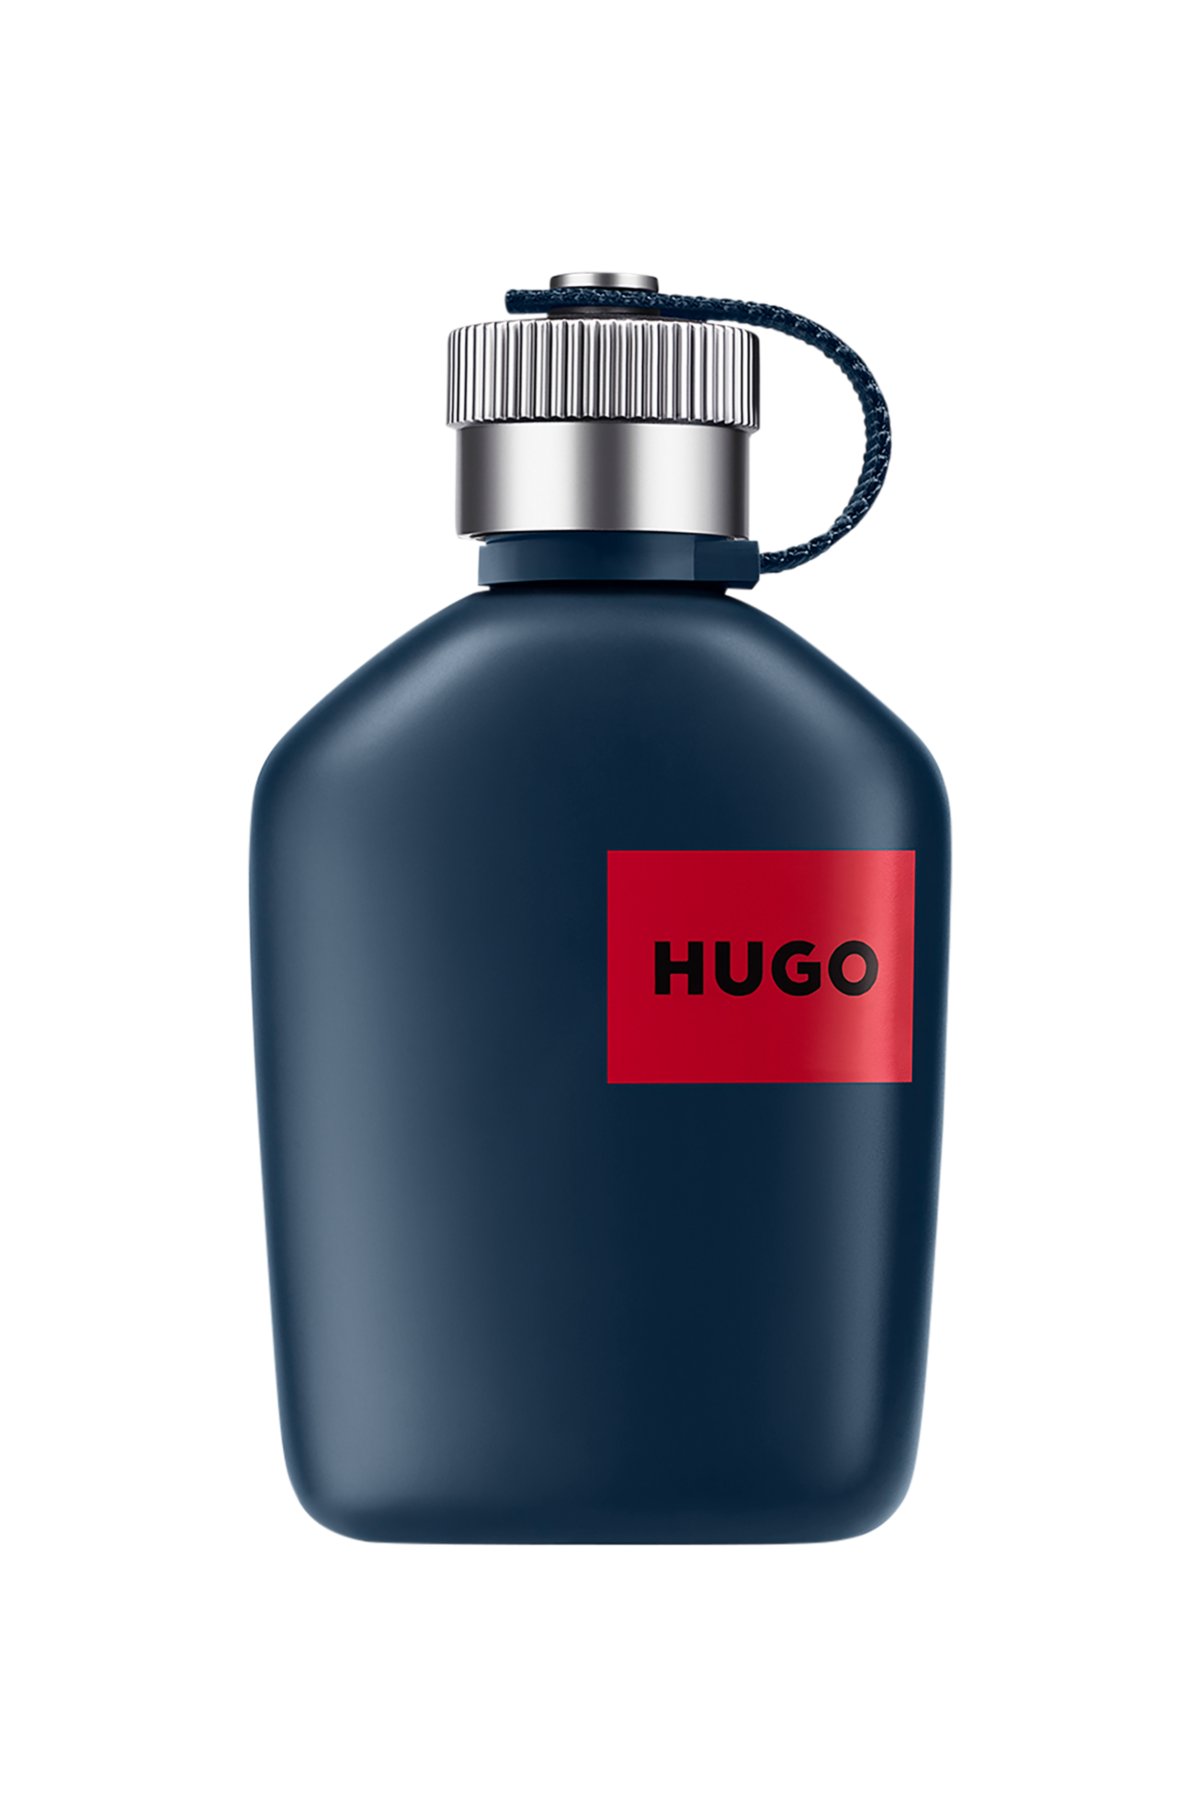 HUGO - HUGO Jeans eau de toilette 125ml